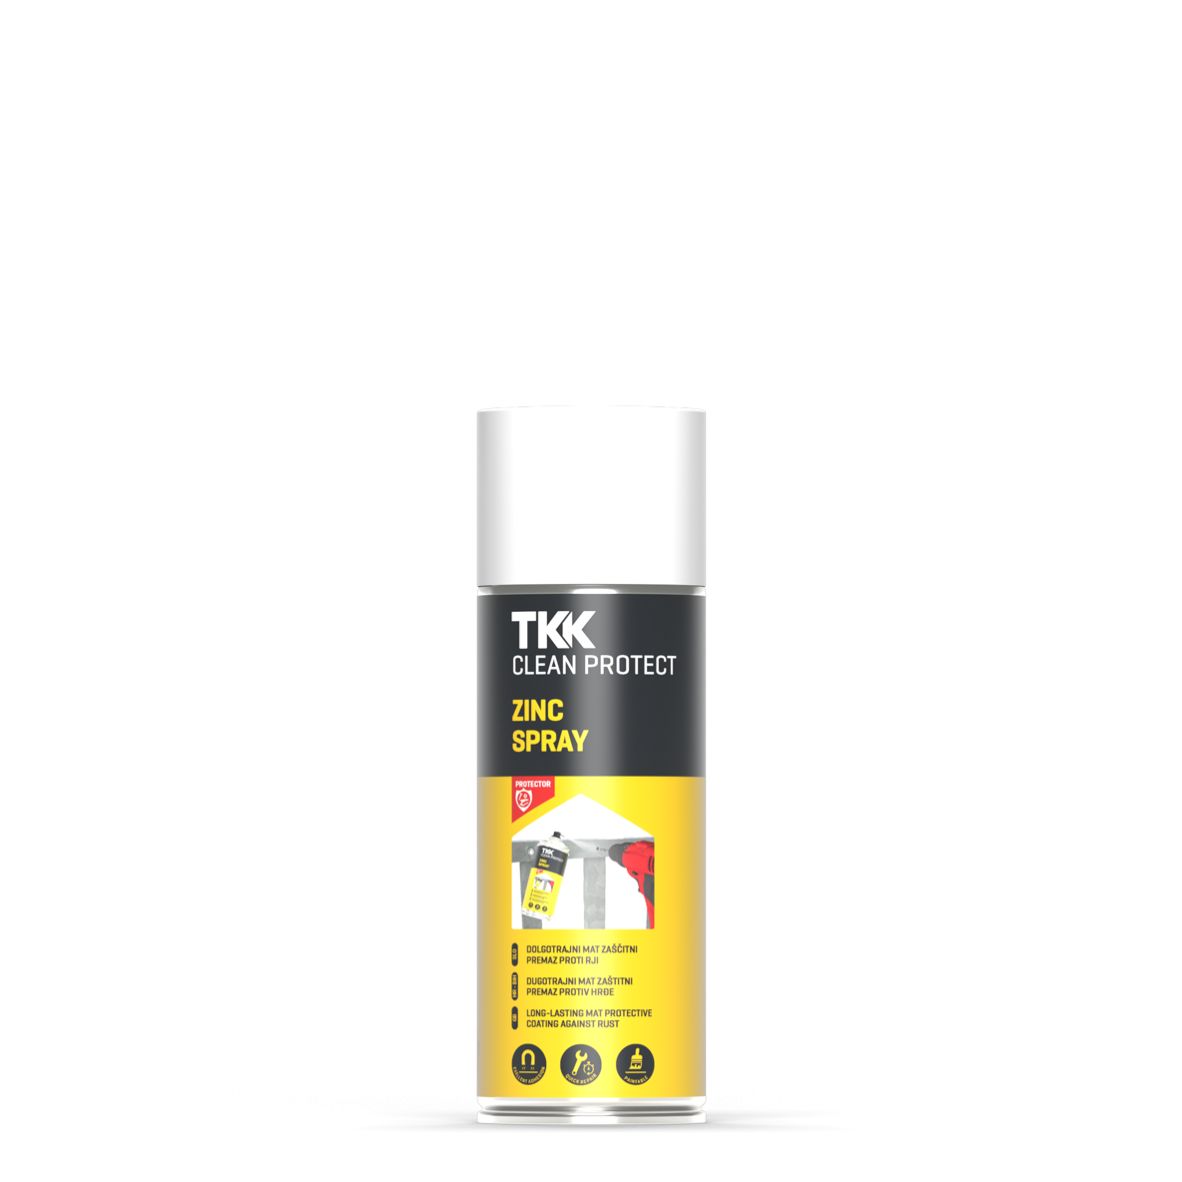 TKK Clean Protect Zinc Spray